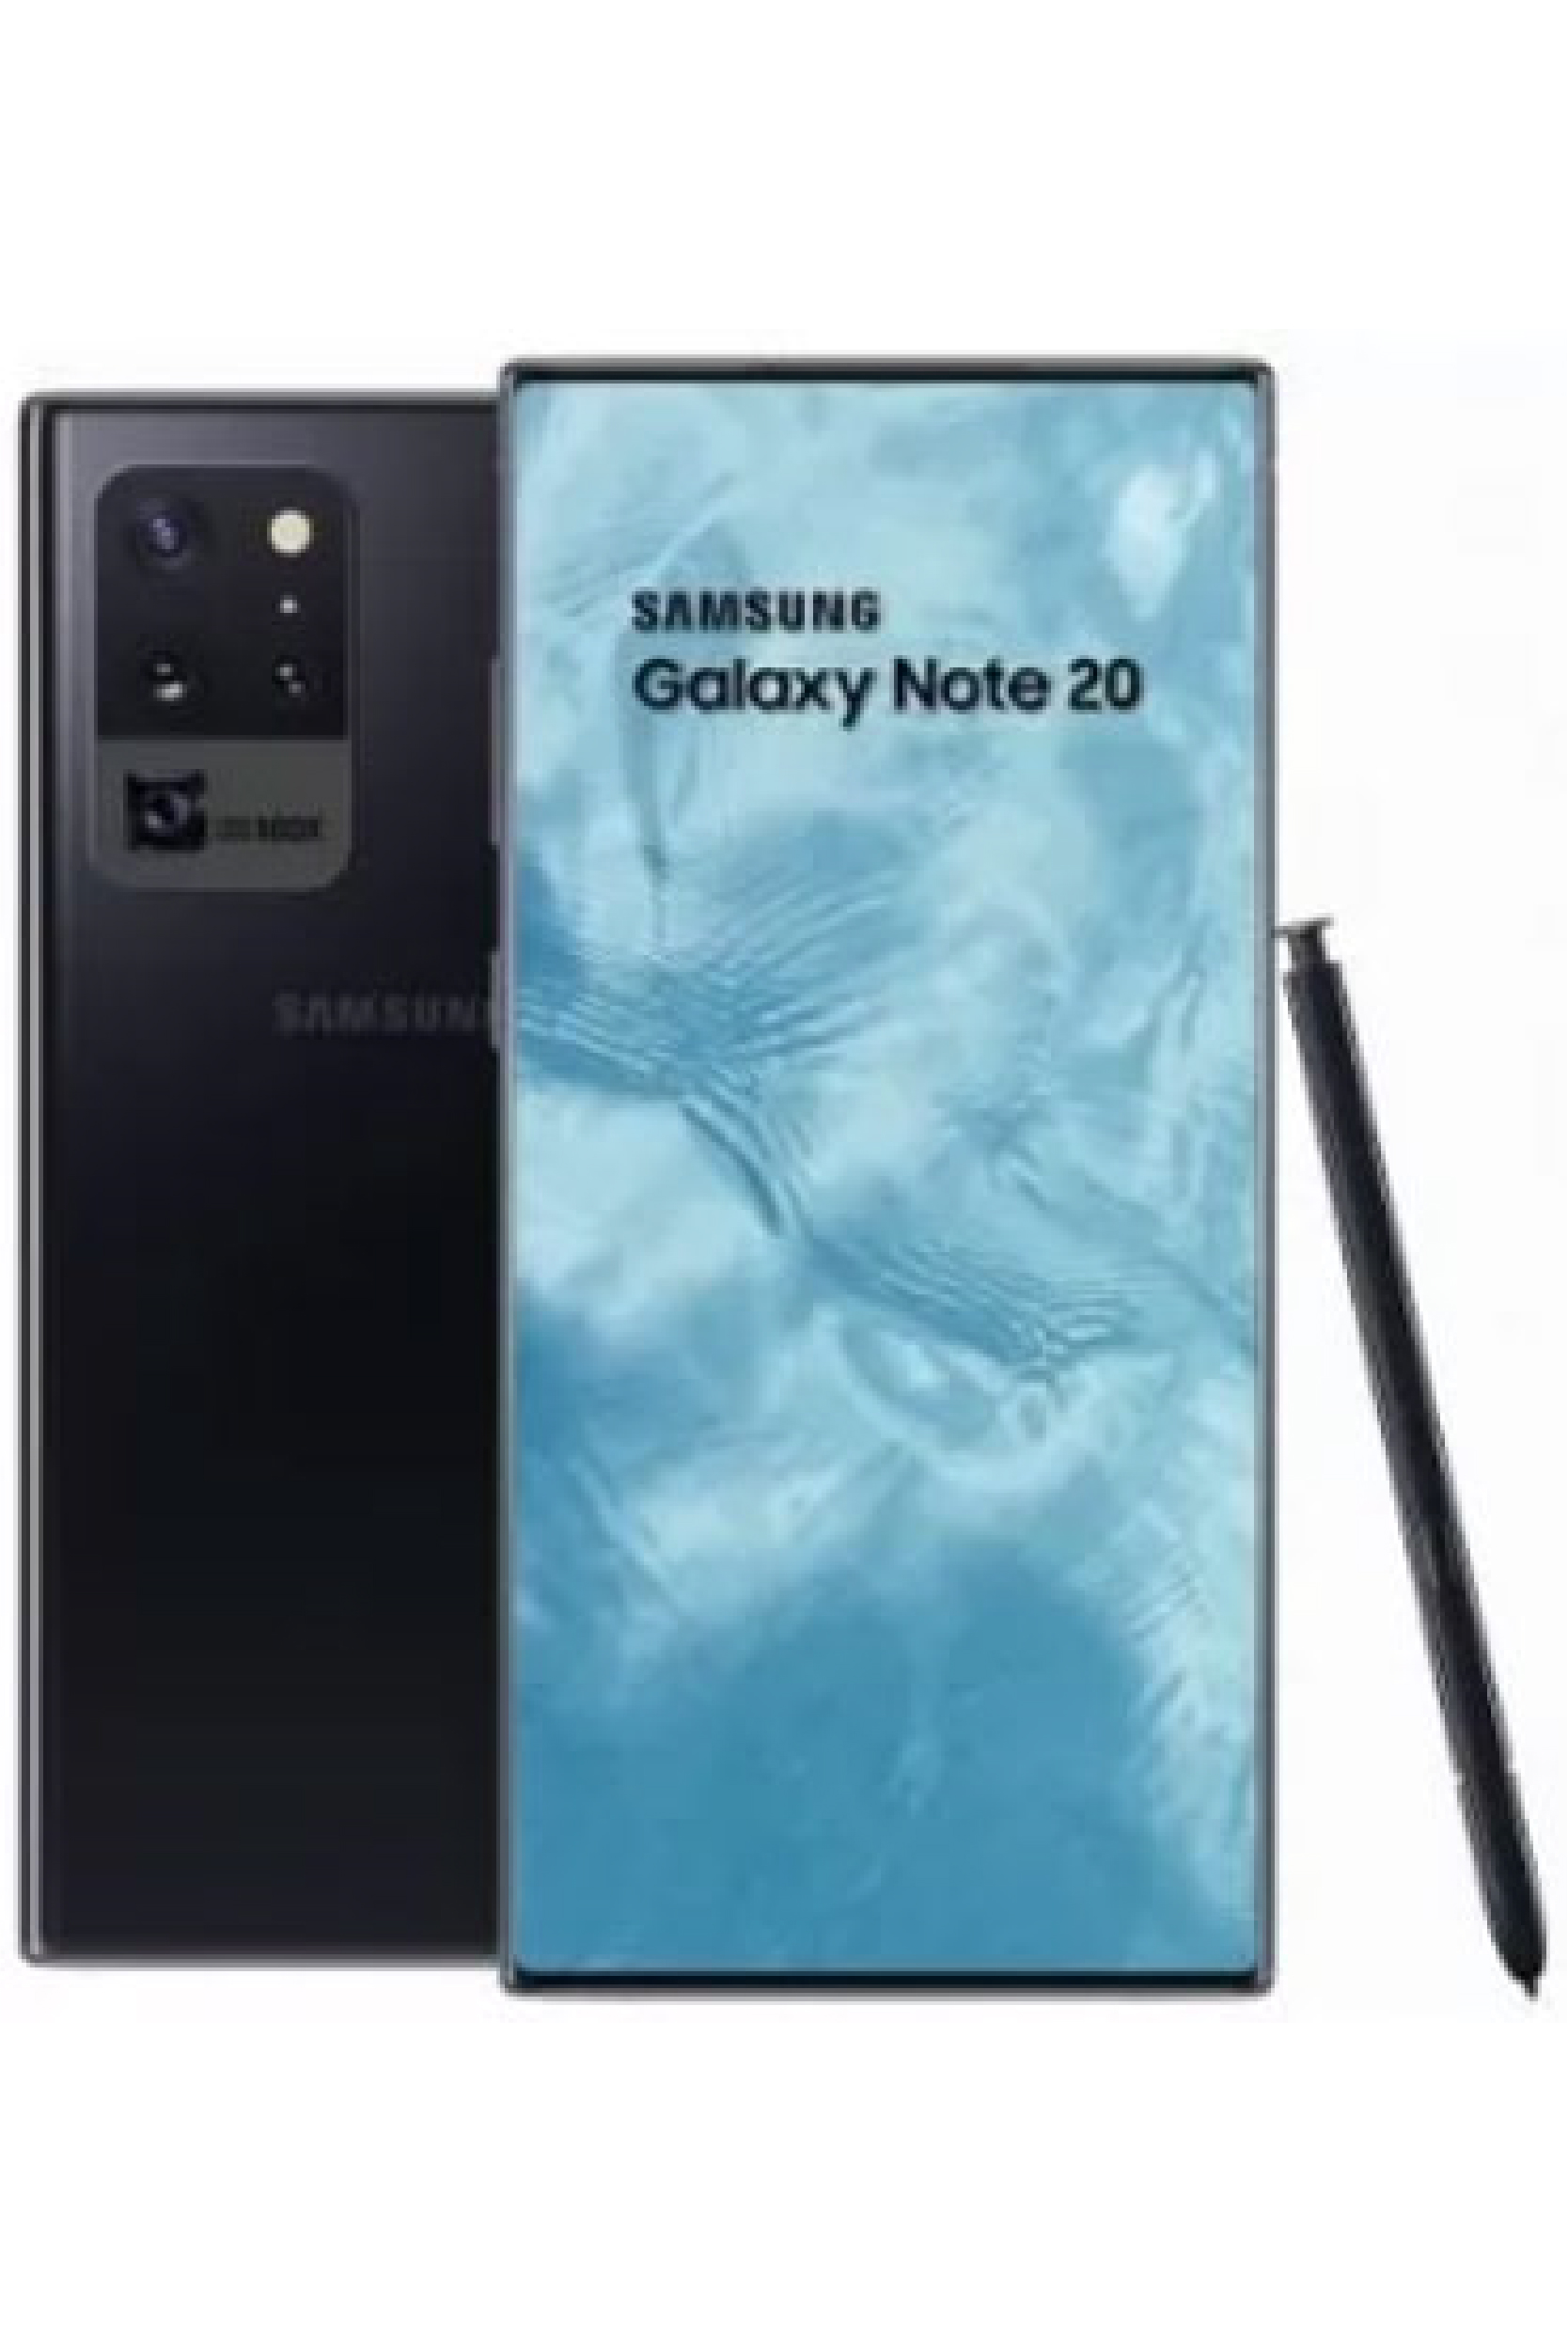 Samsung Galaxy Note 20 Ultra Price in Pakistan & Specs | ProPakistani